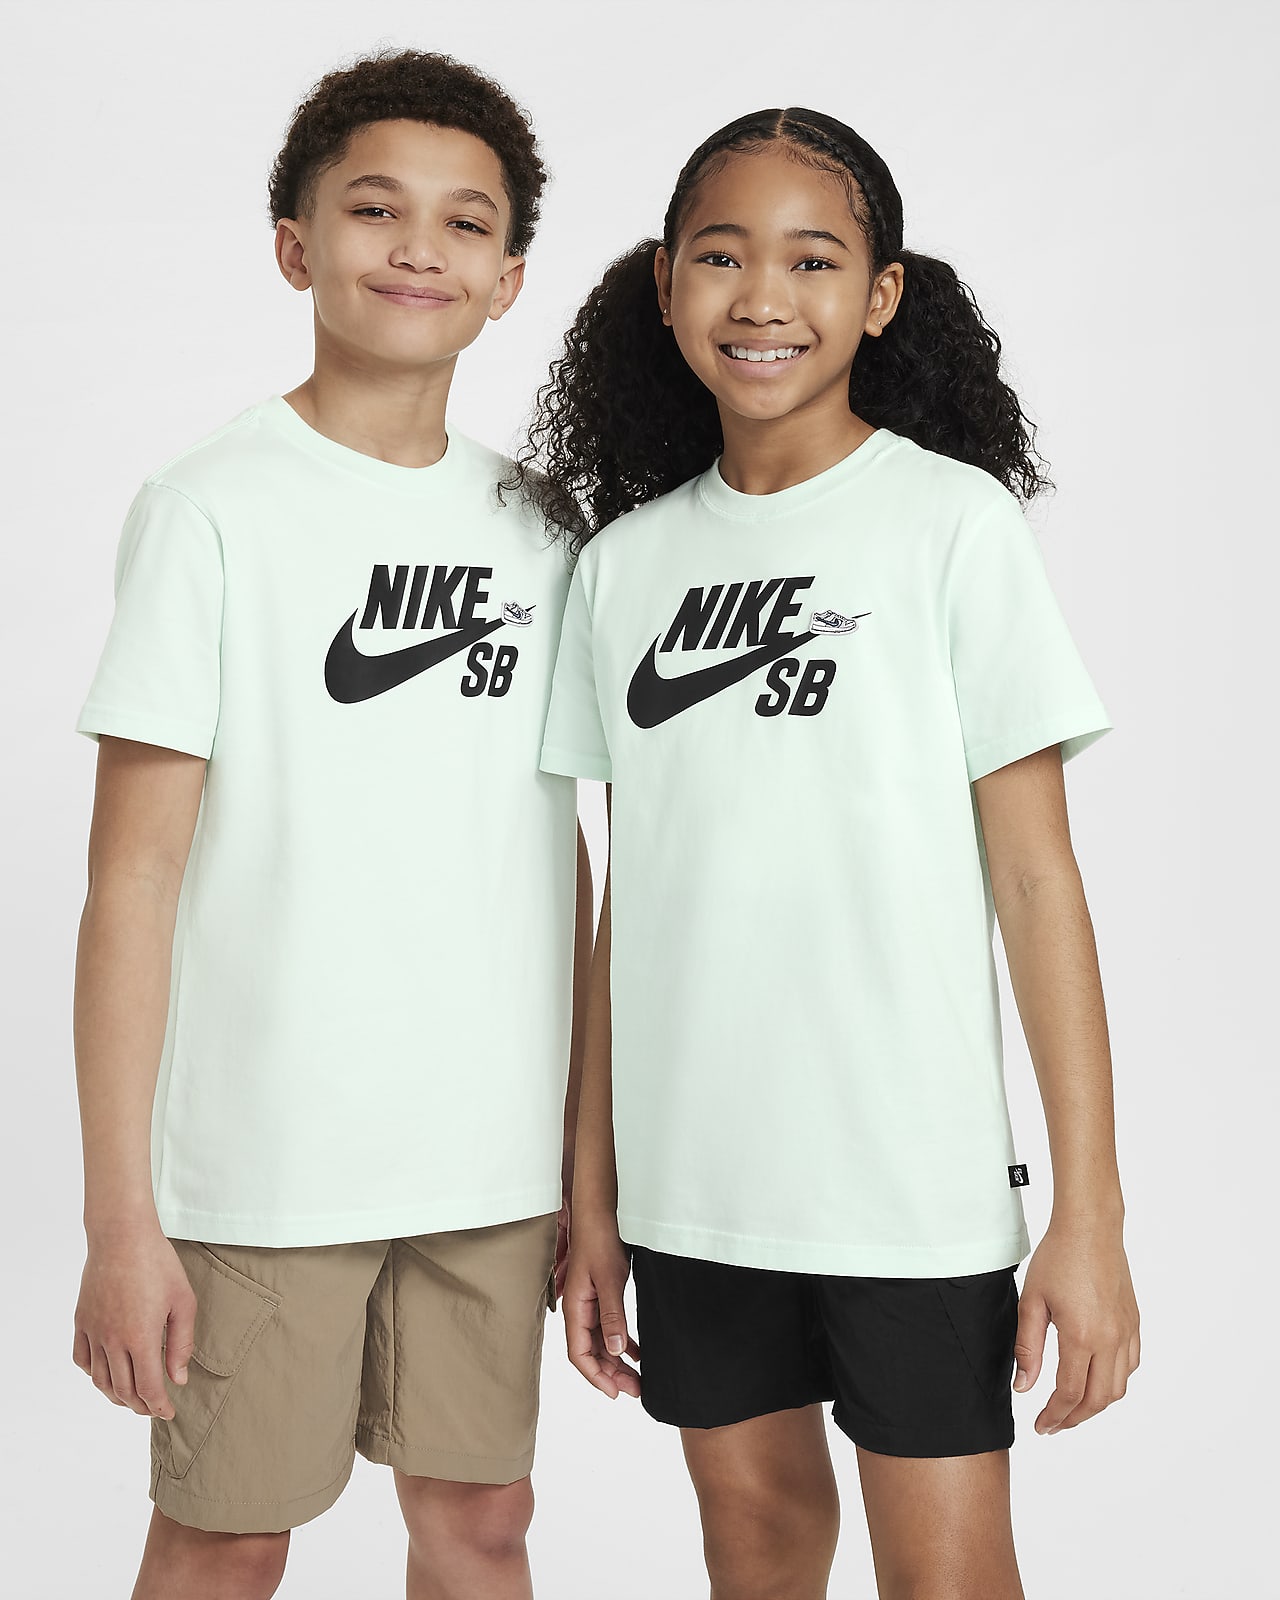 Nike SB Camiseta - Niño/a